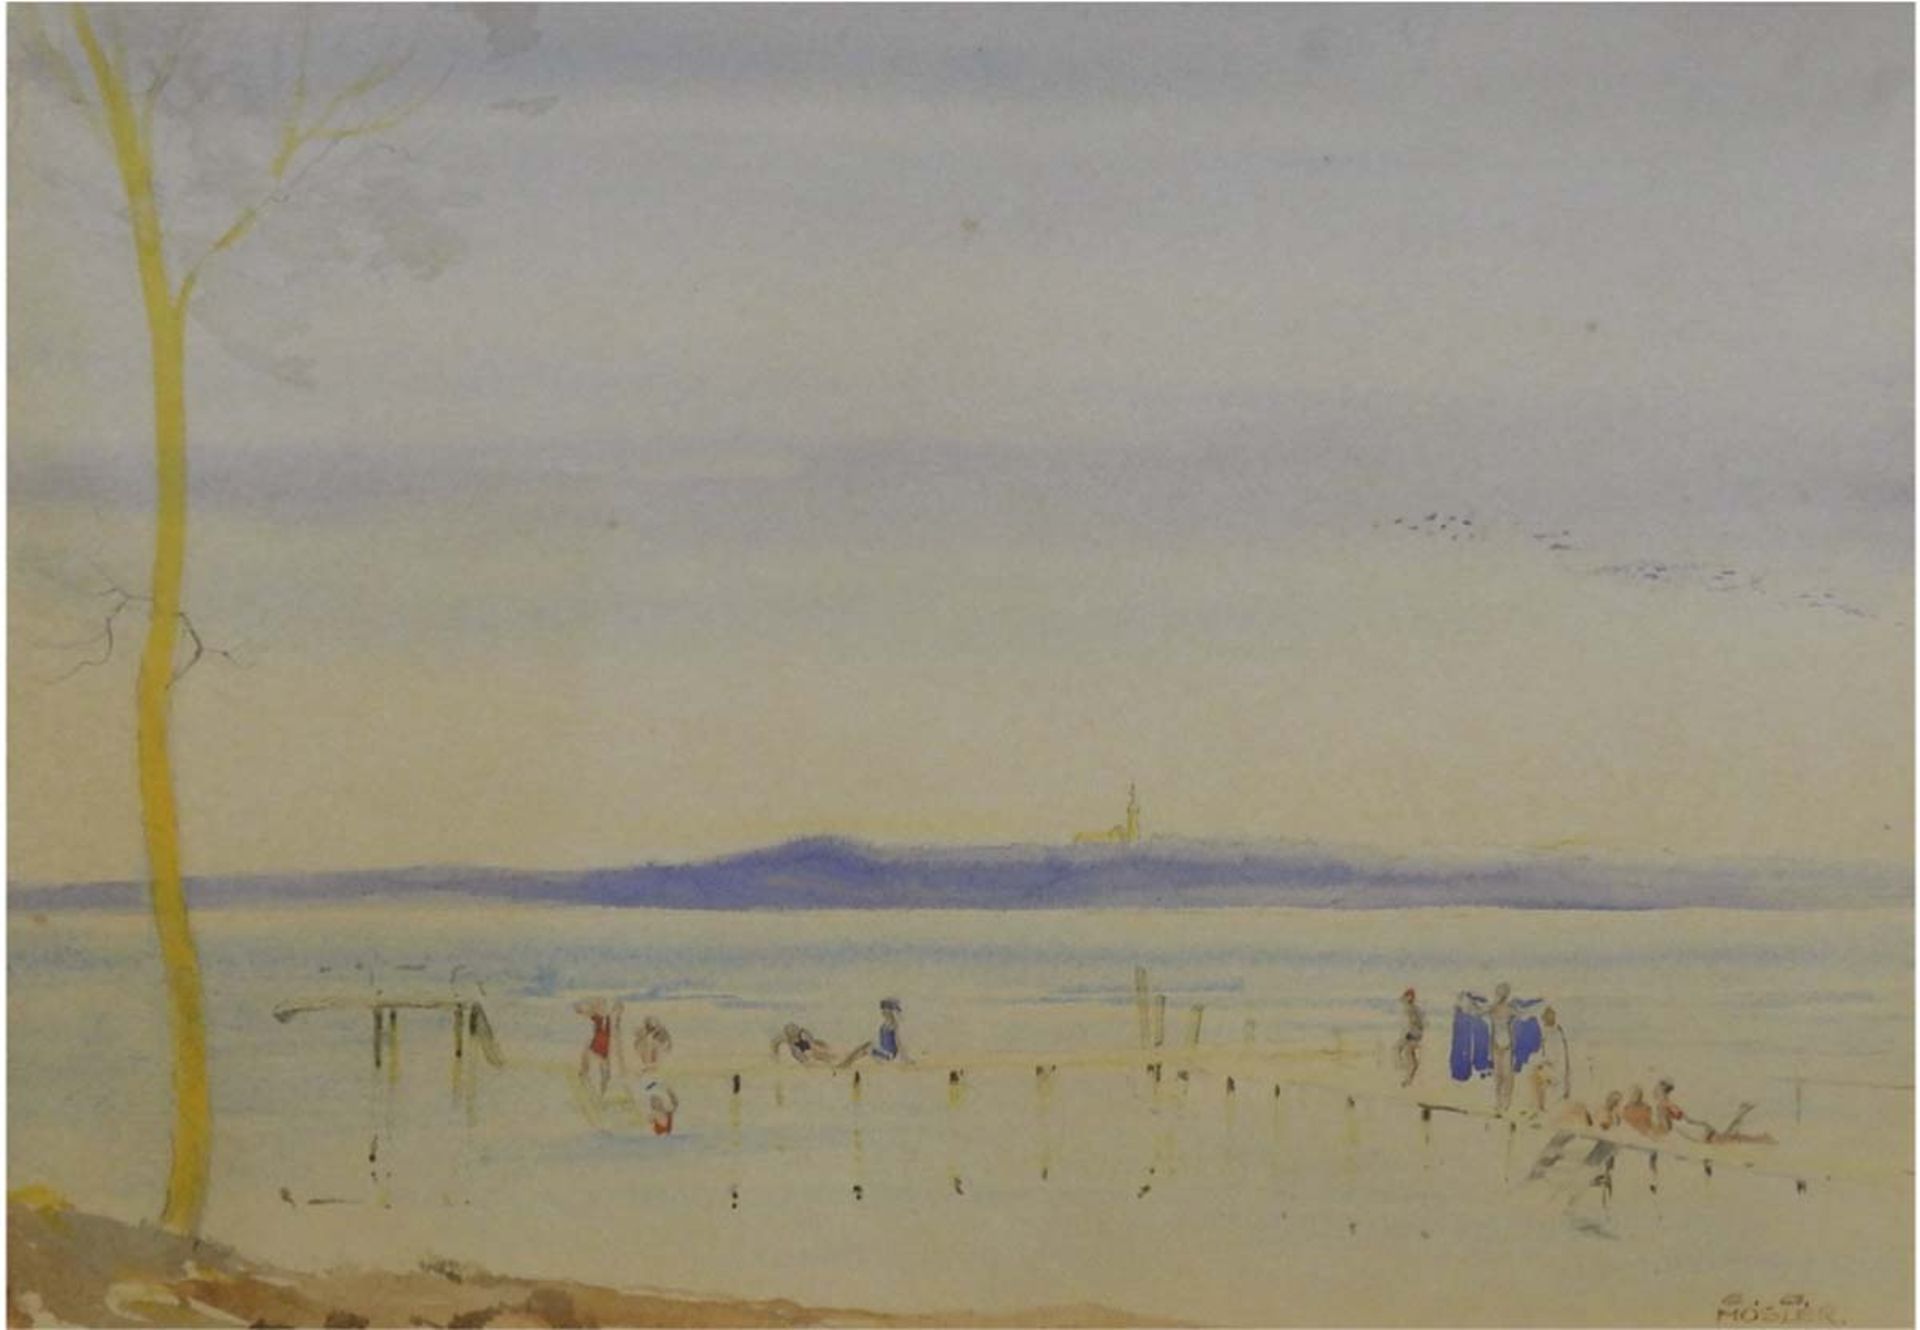 Mosler, E. G. "Am Strand", Aquarell, sign. u.r., 27,5x37,5 cm, im Passepartout hinter Glasund